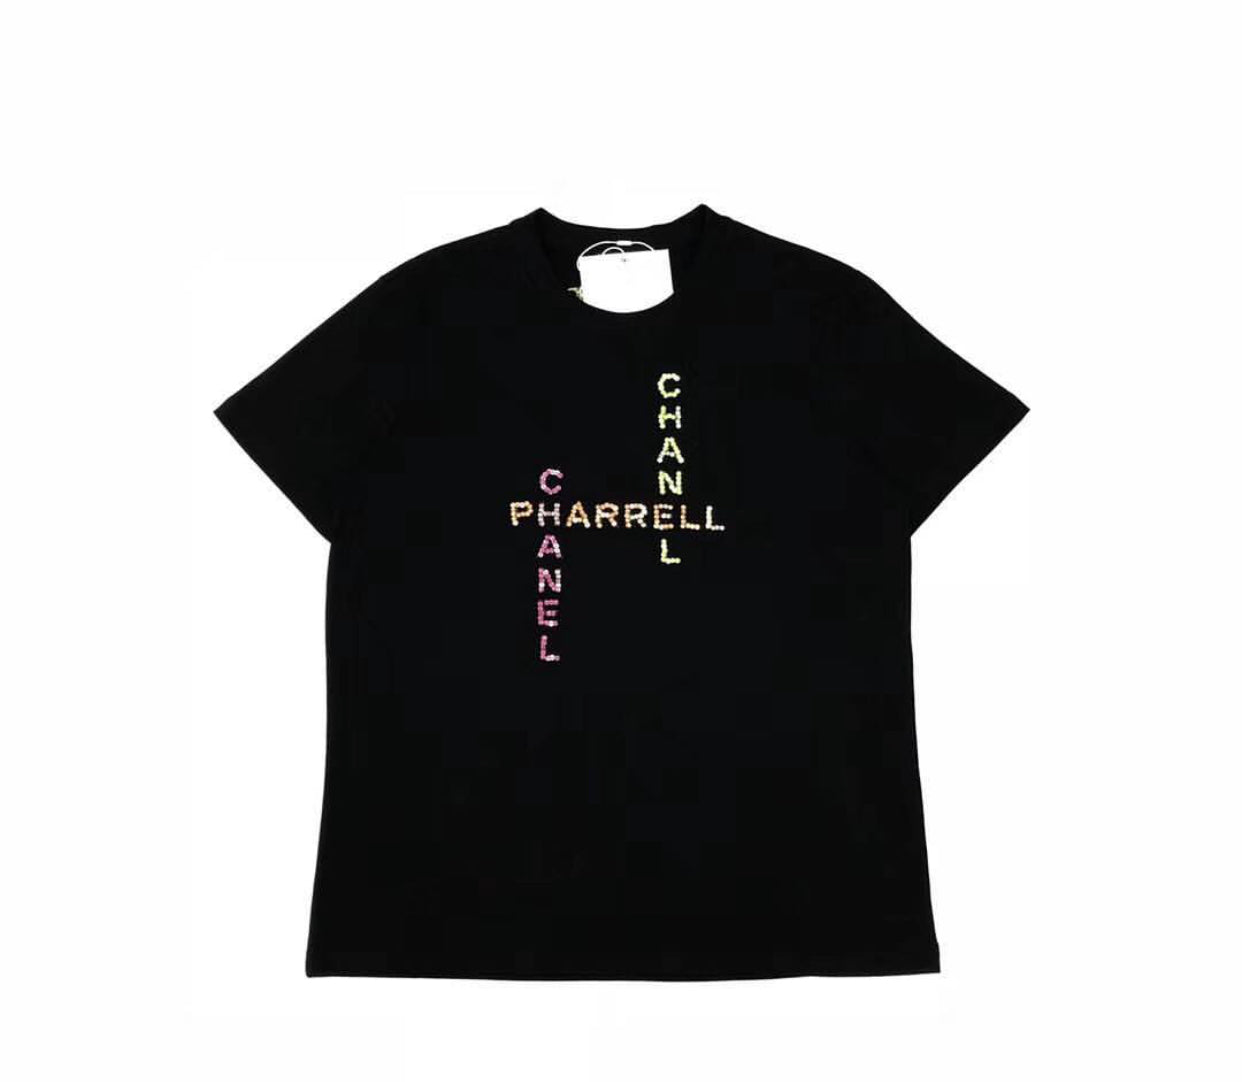 pharrell chanel shirt